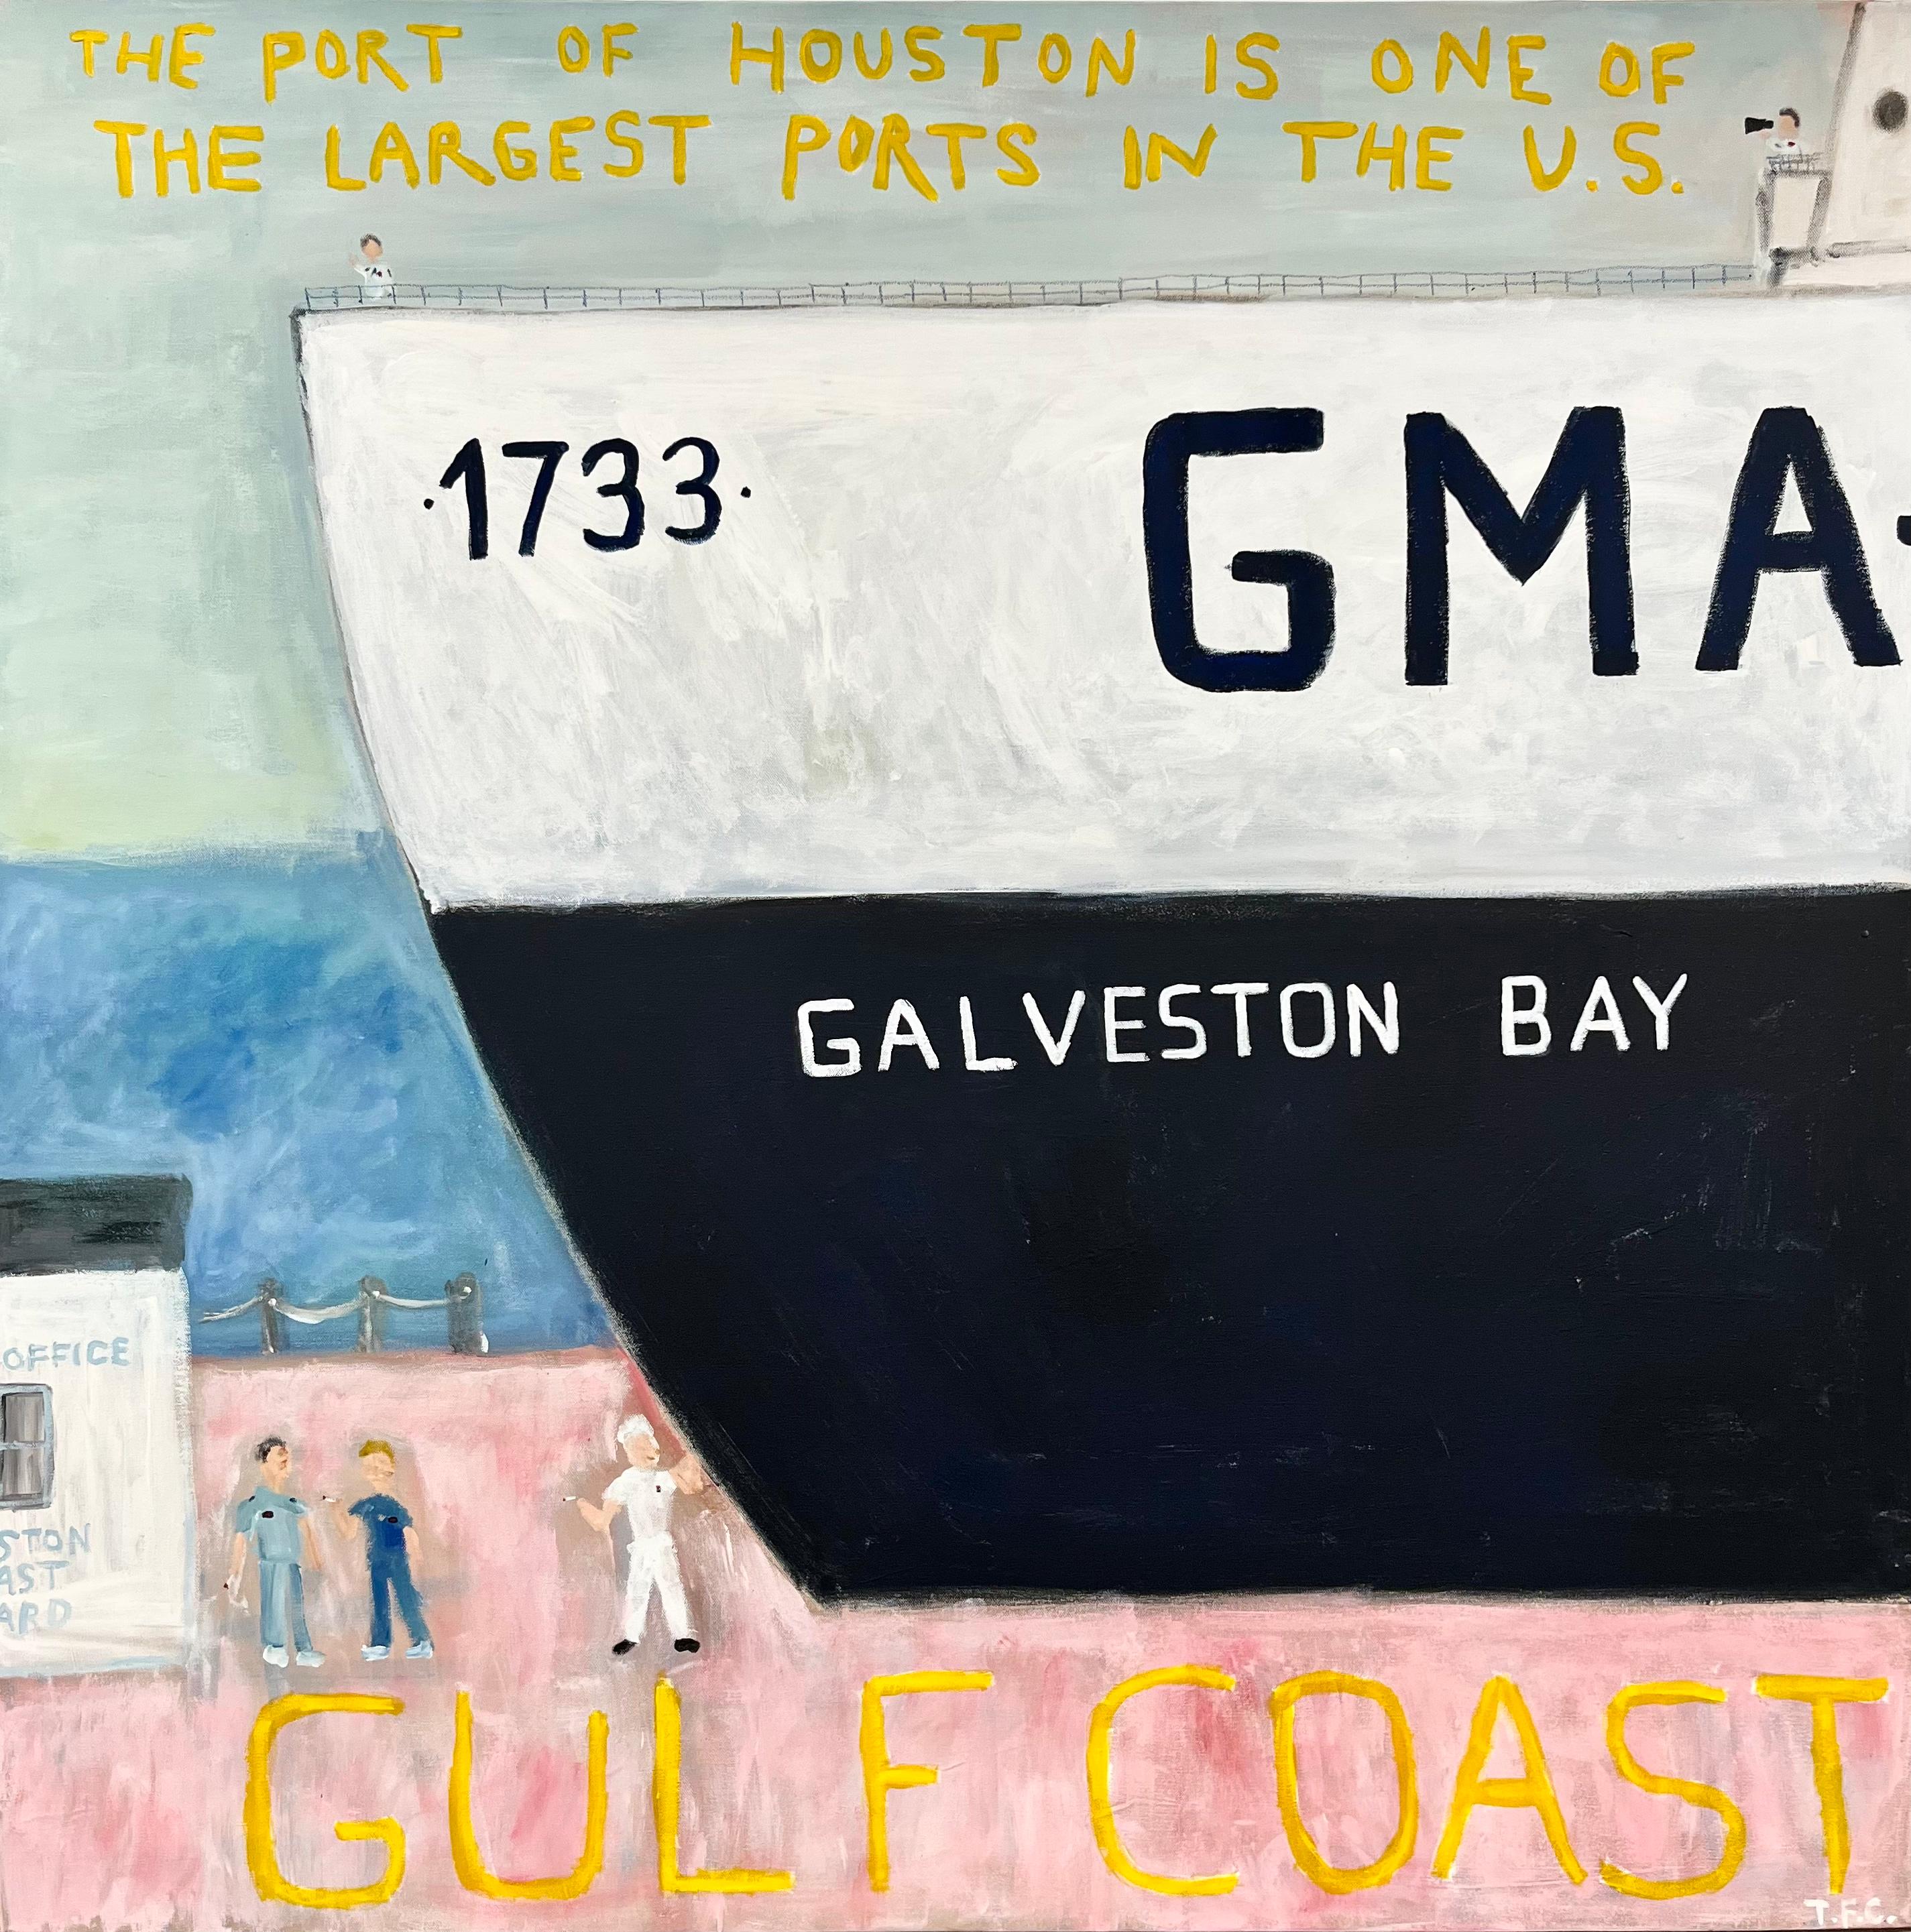 "Gulf Coast" Peinture nautique abstraite contemporaine Pop Art de la baie de Galveston